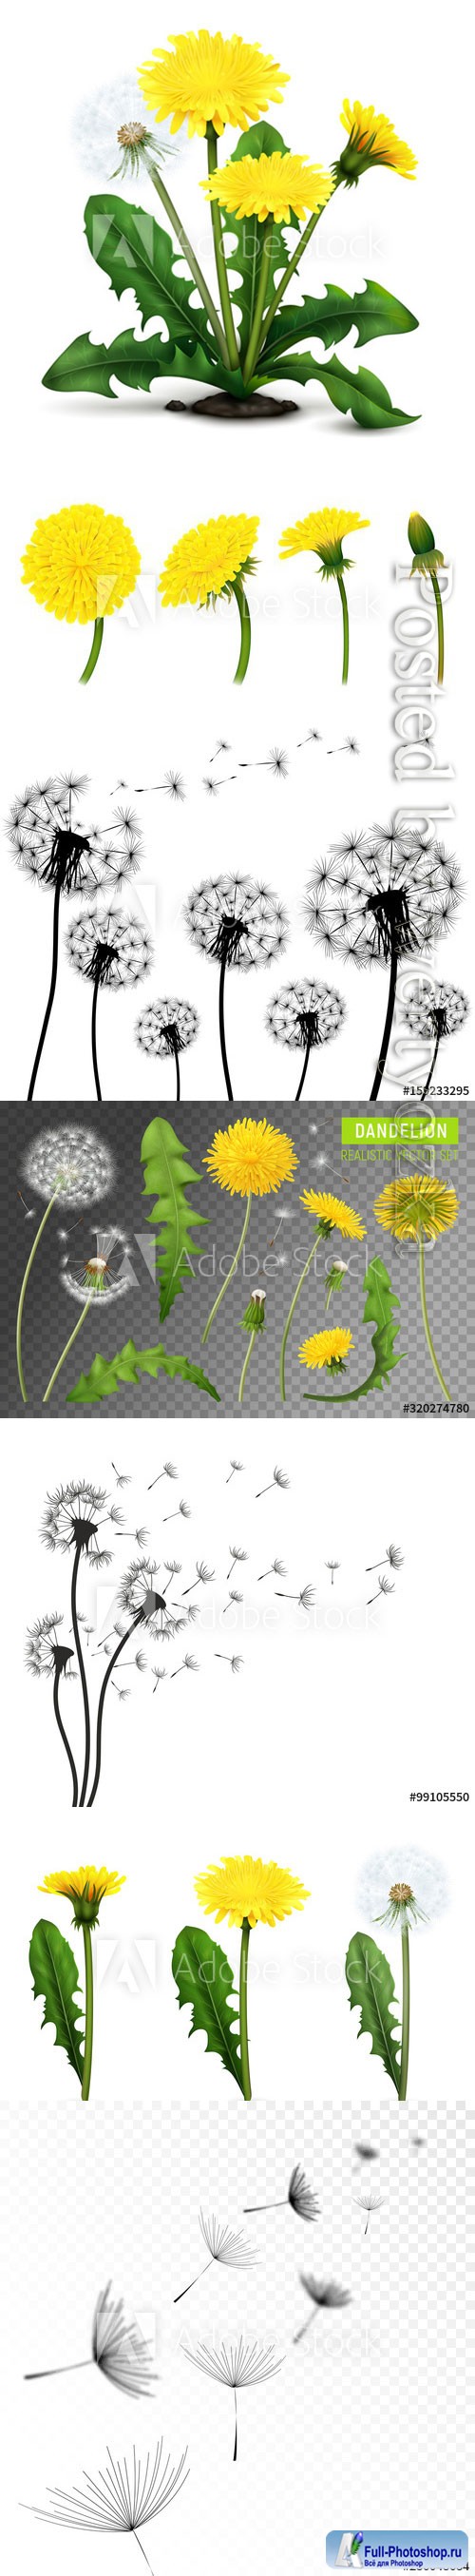 Dandelions vector illustrations